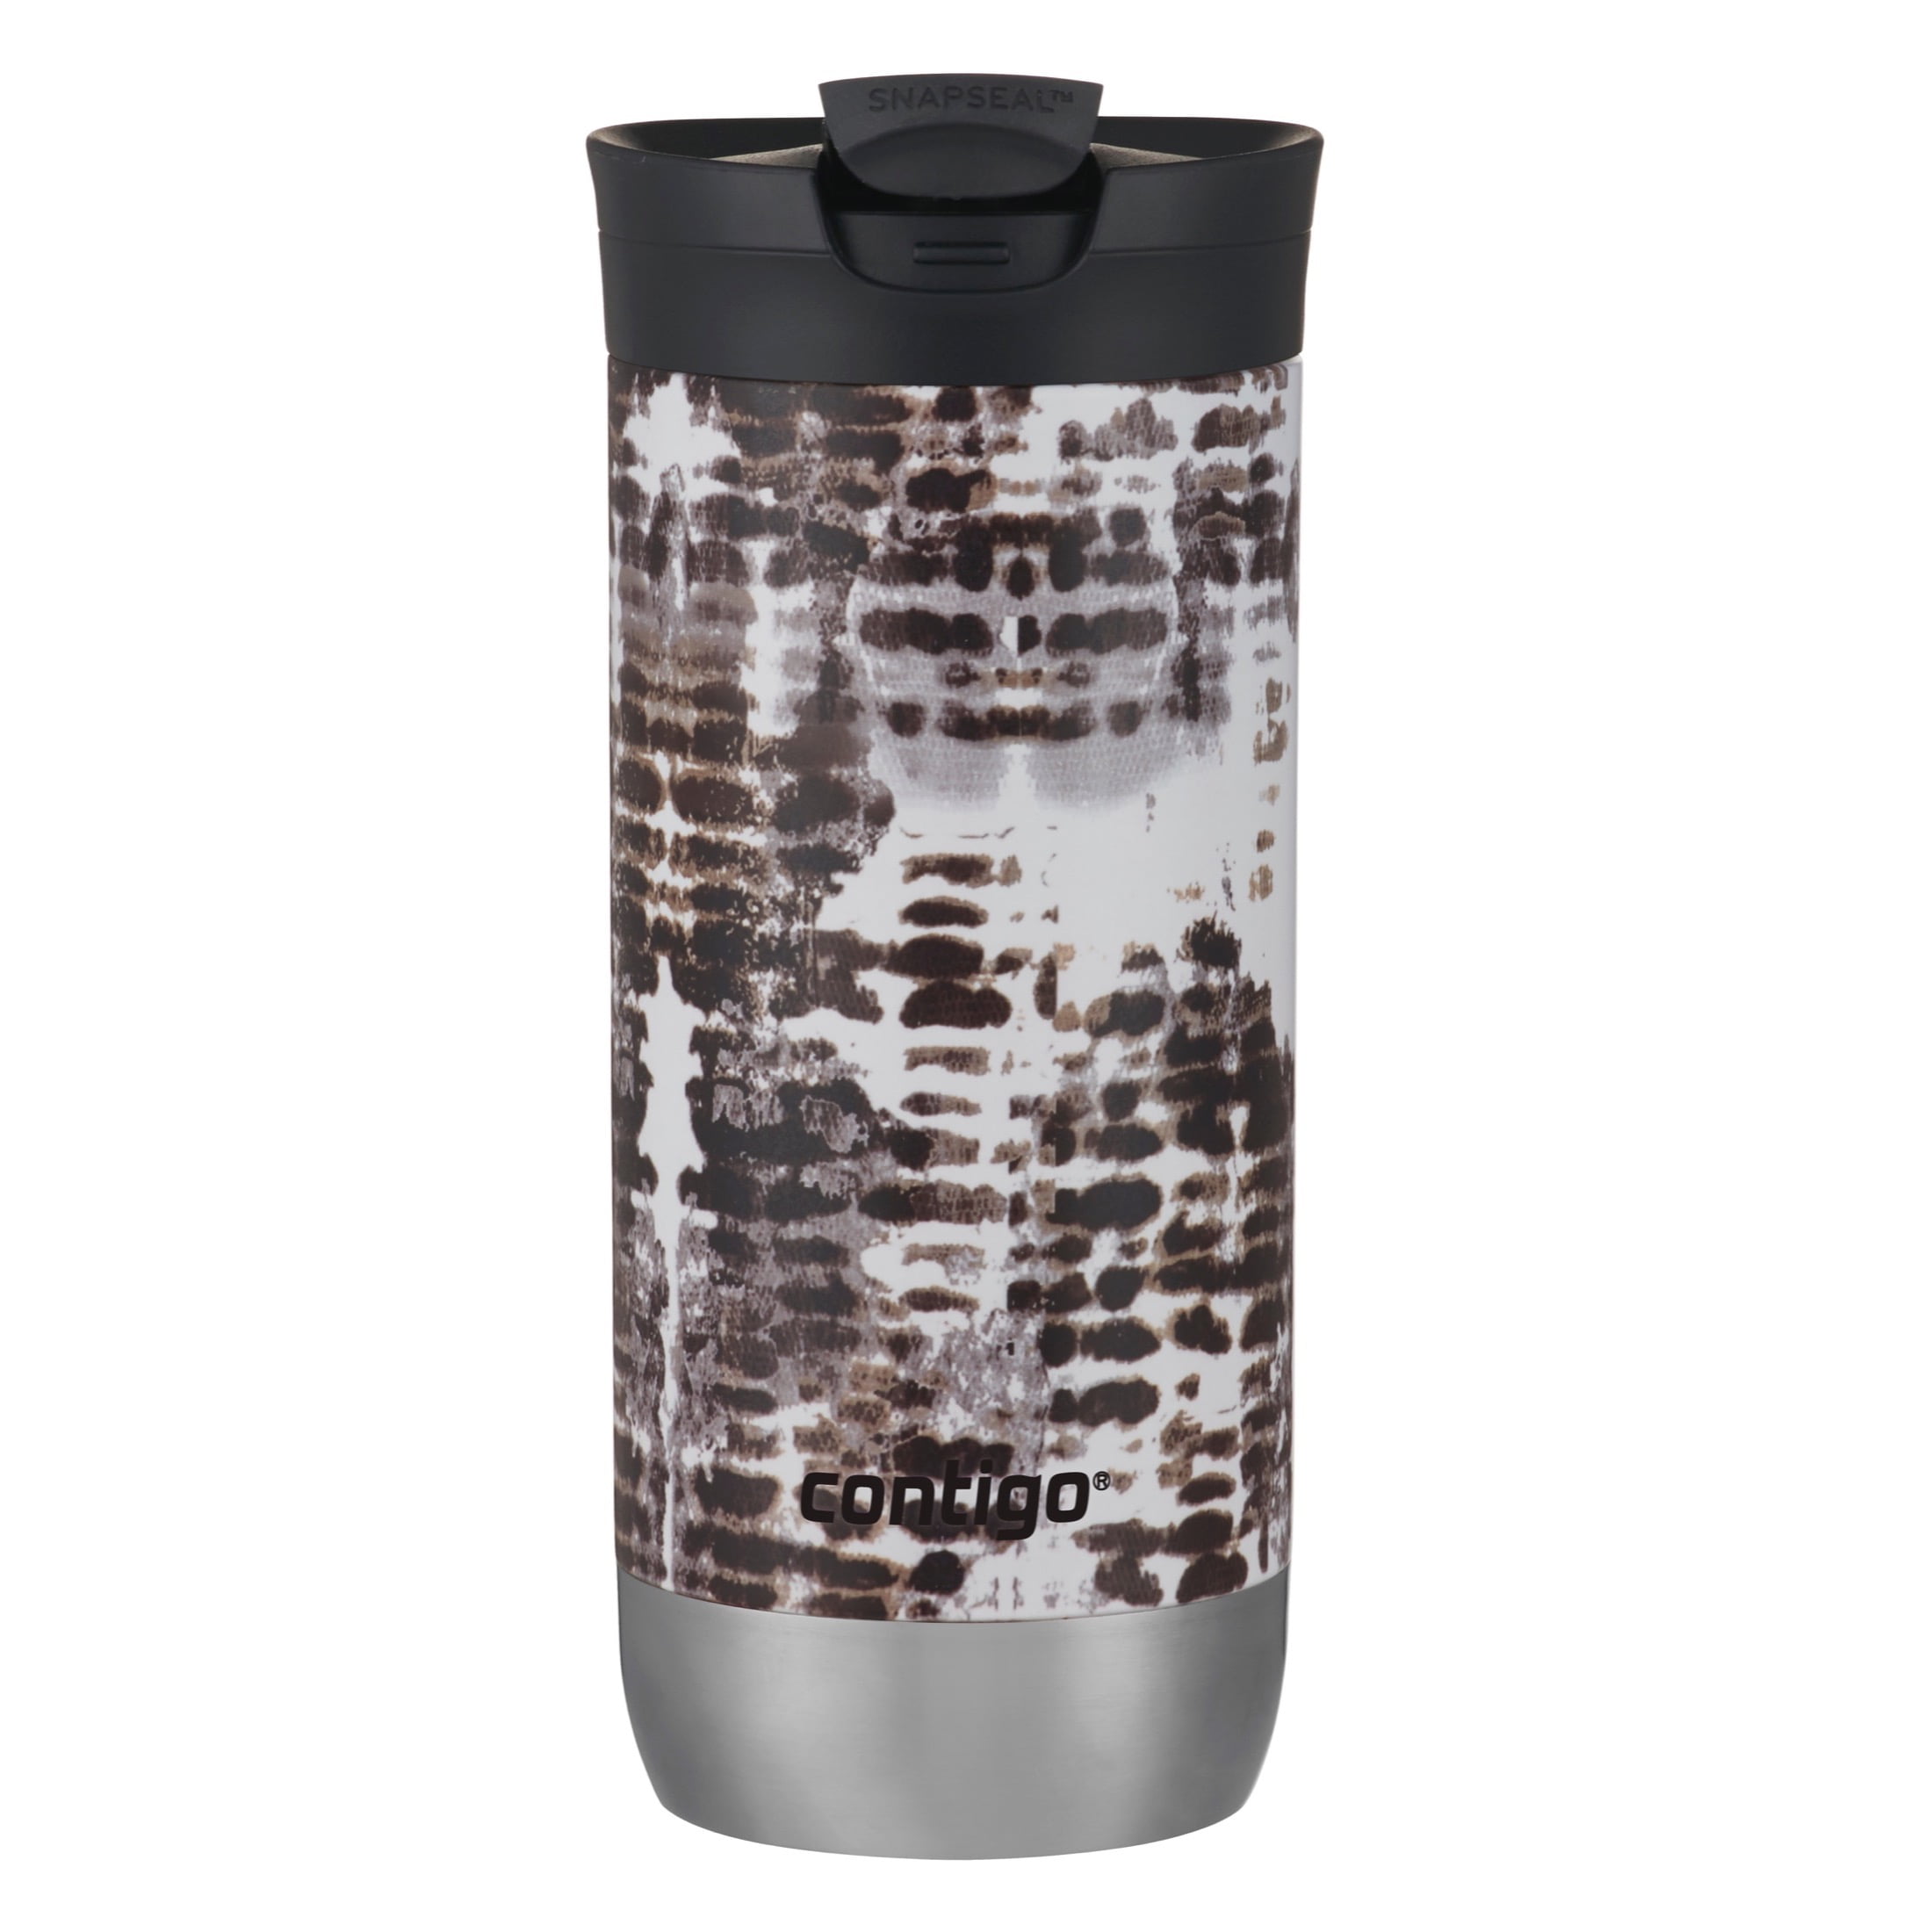 Contigo 20 oz. Huron 2.0 Snapseal Insulated Stainless Steel Travel Mug 2-Pack